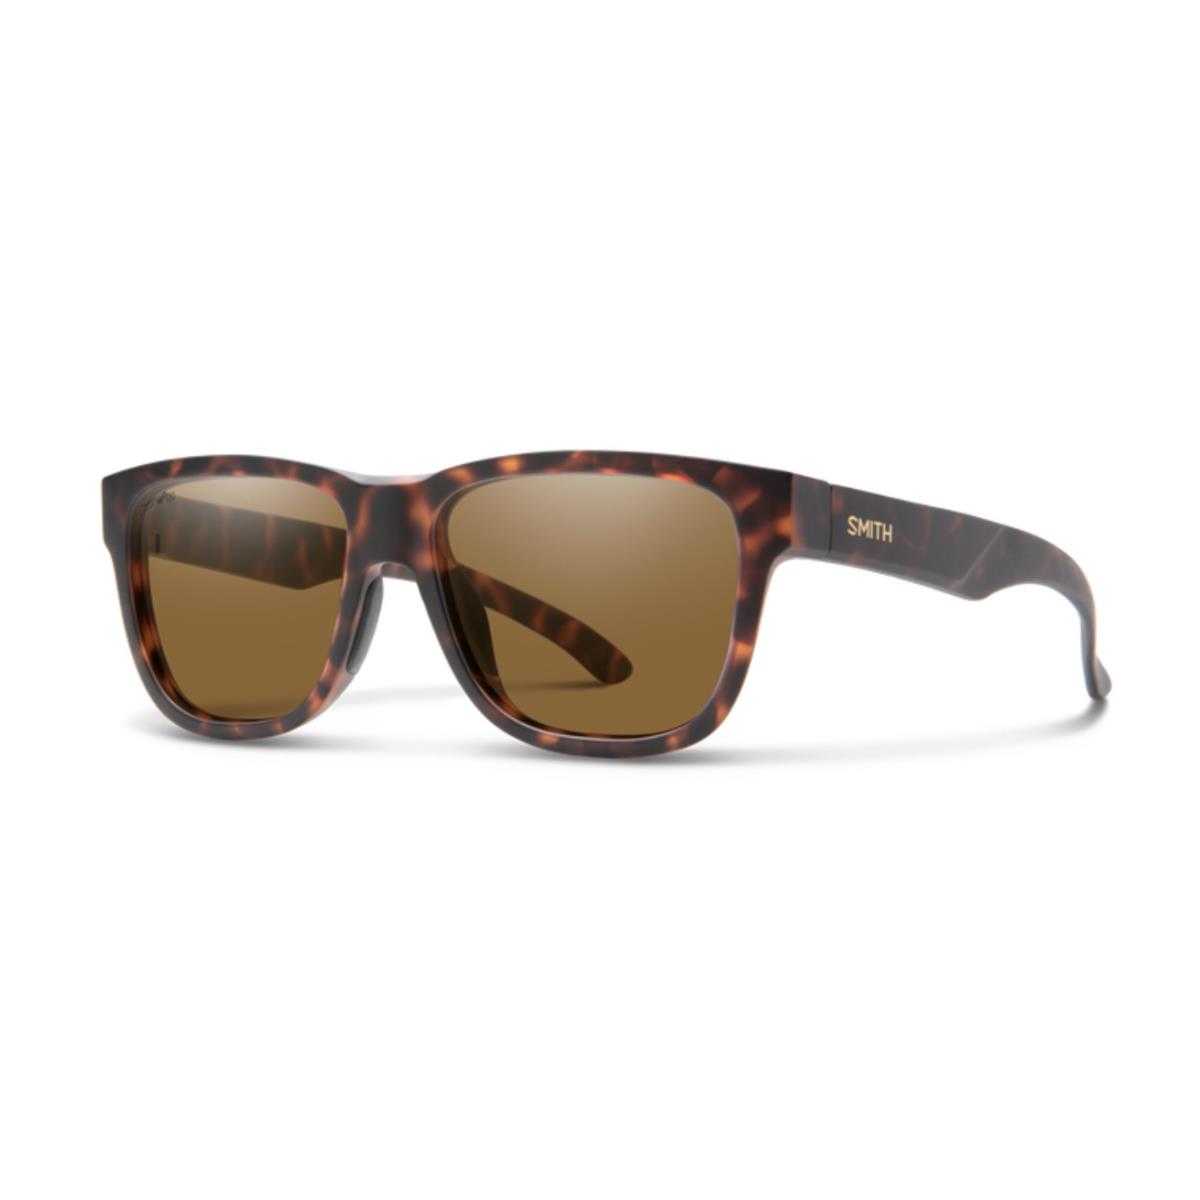 Smith Optics Lowdown Slim 2 Polarized Sunglasses - Matte Tortoise/brown Lens